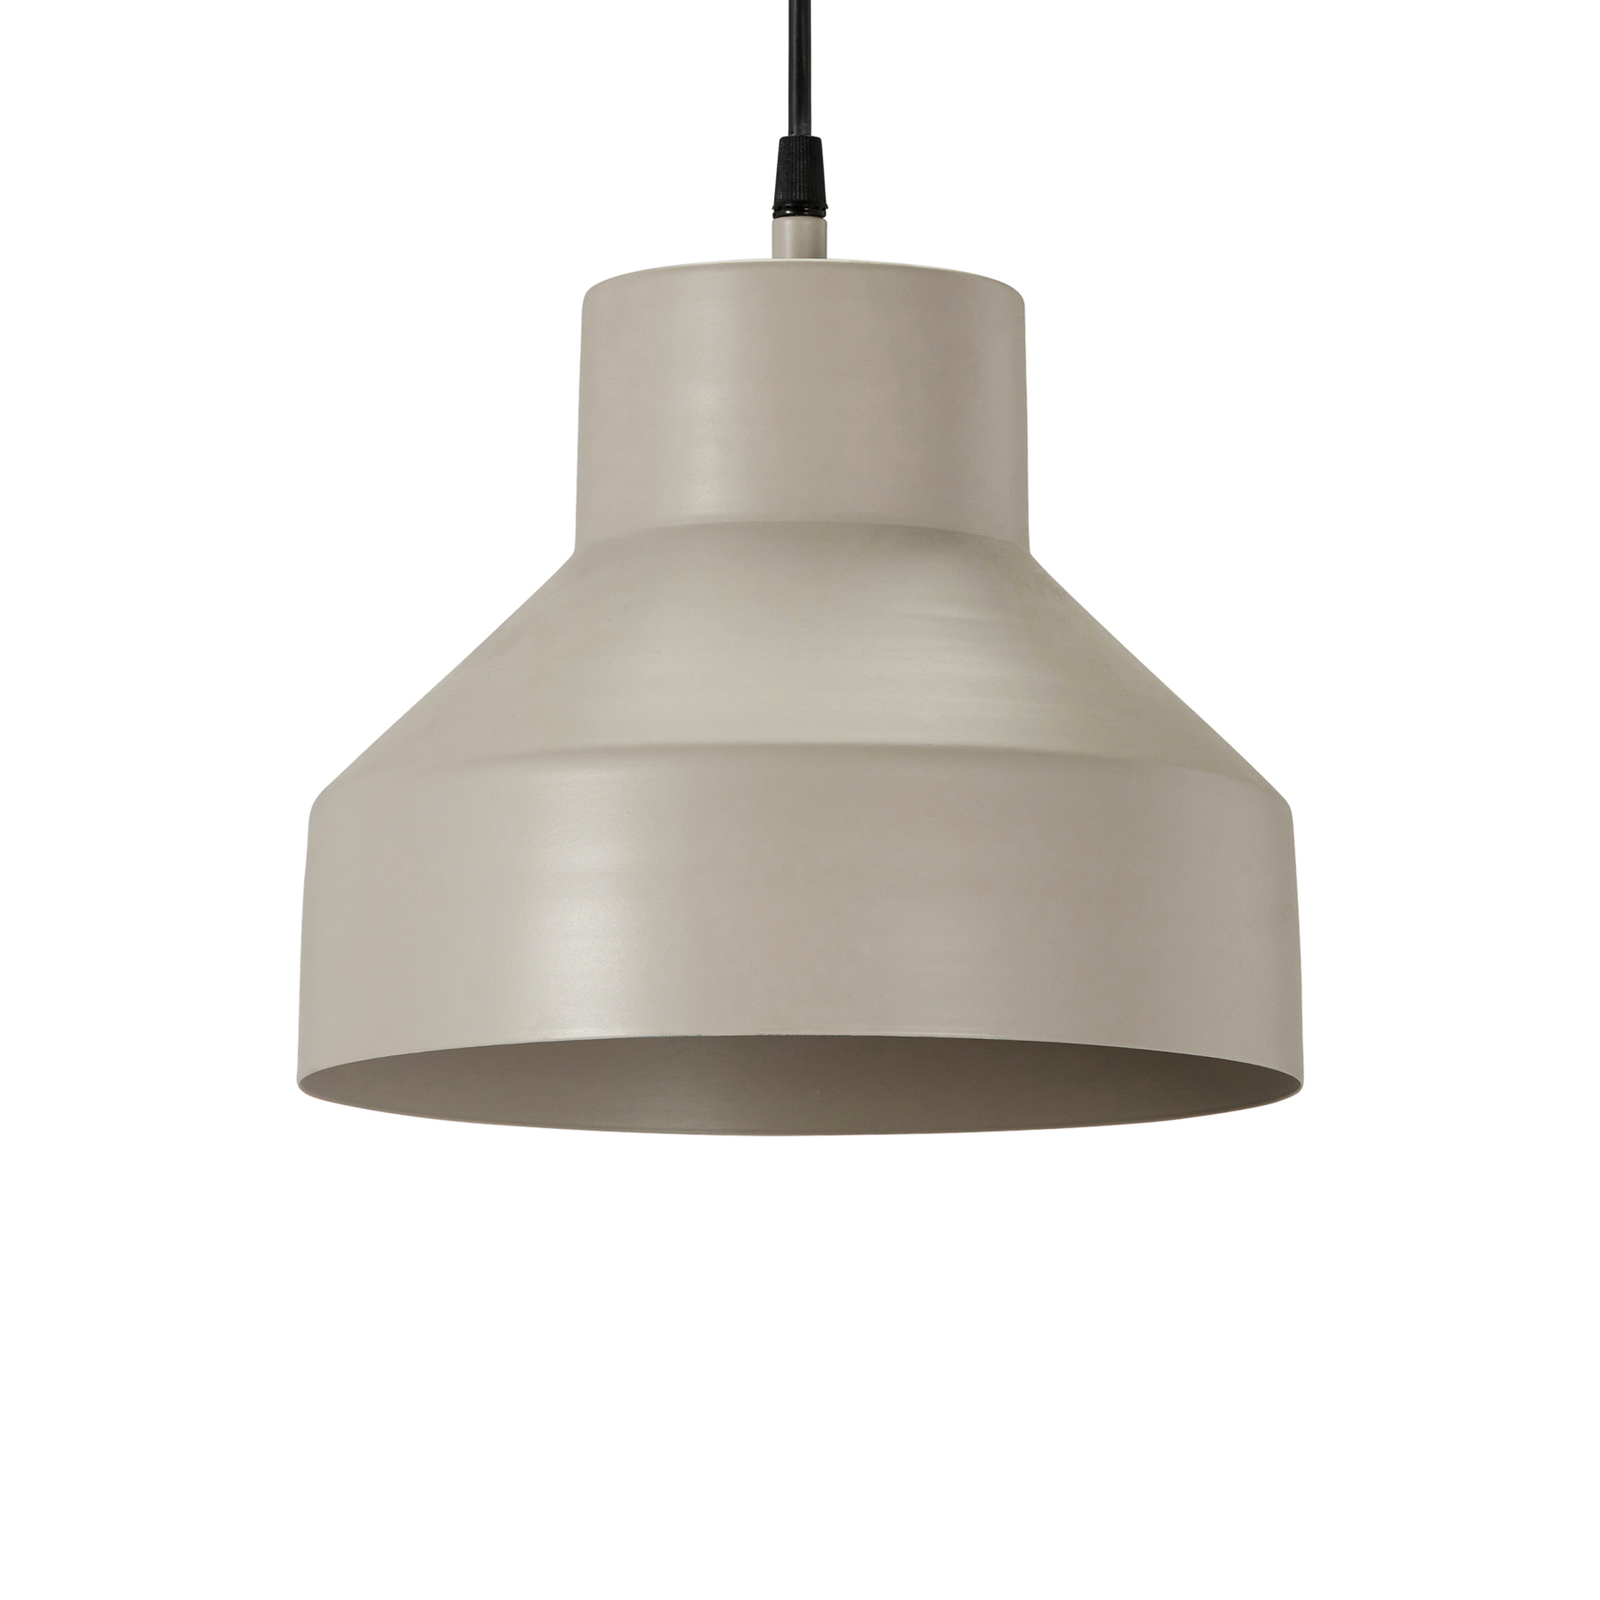 PR Home Solo hanglamp Ø 26 cm beige mat